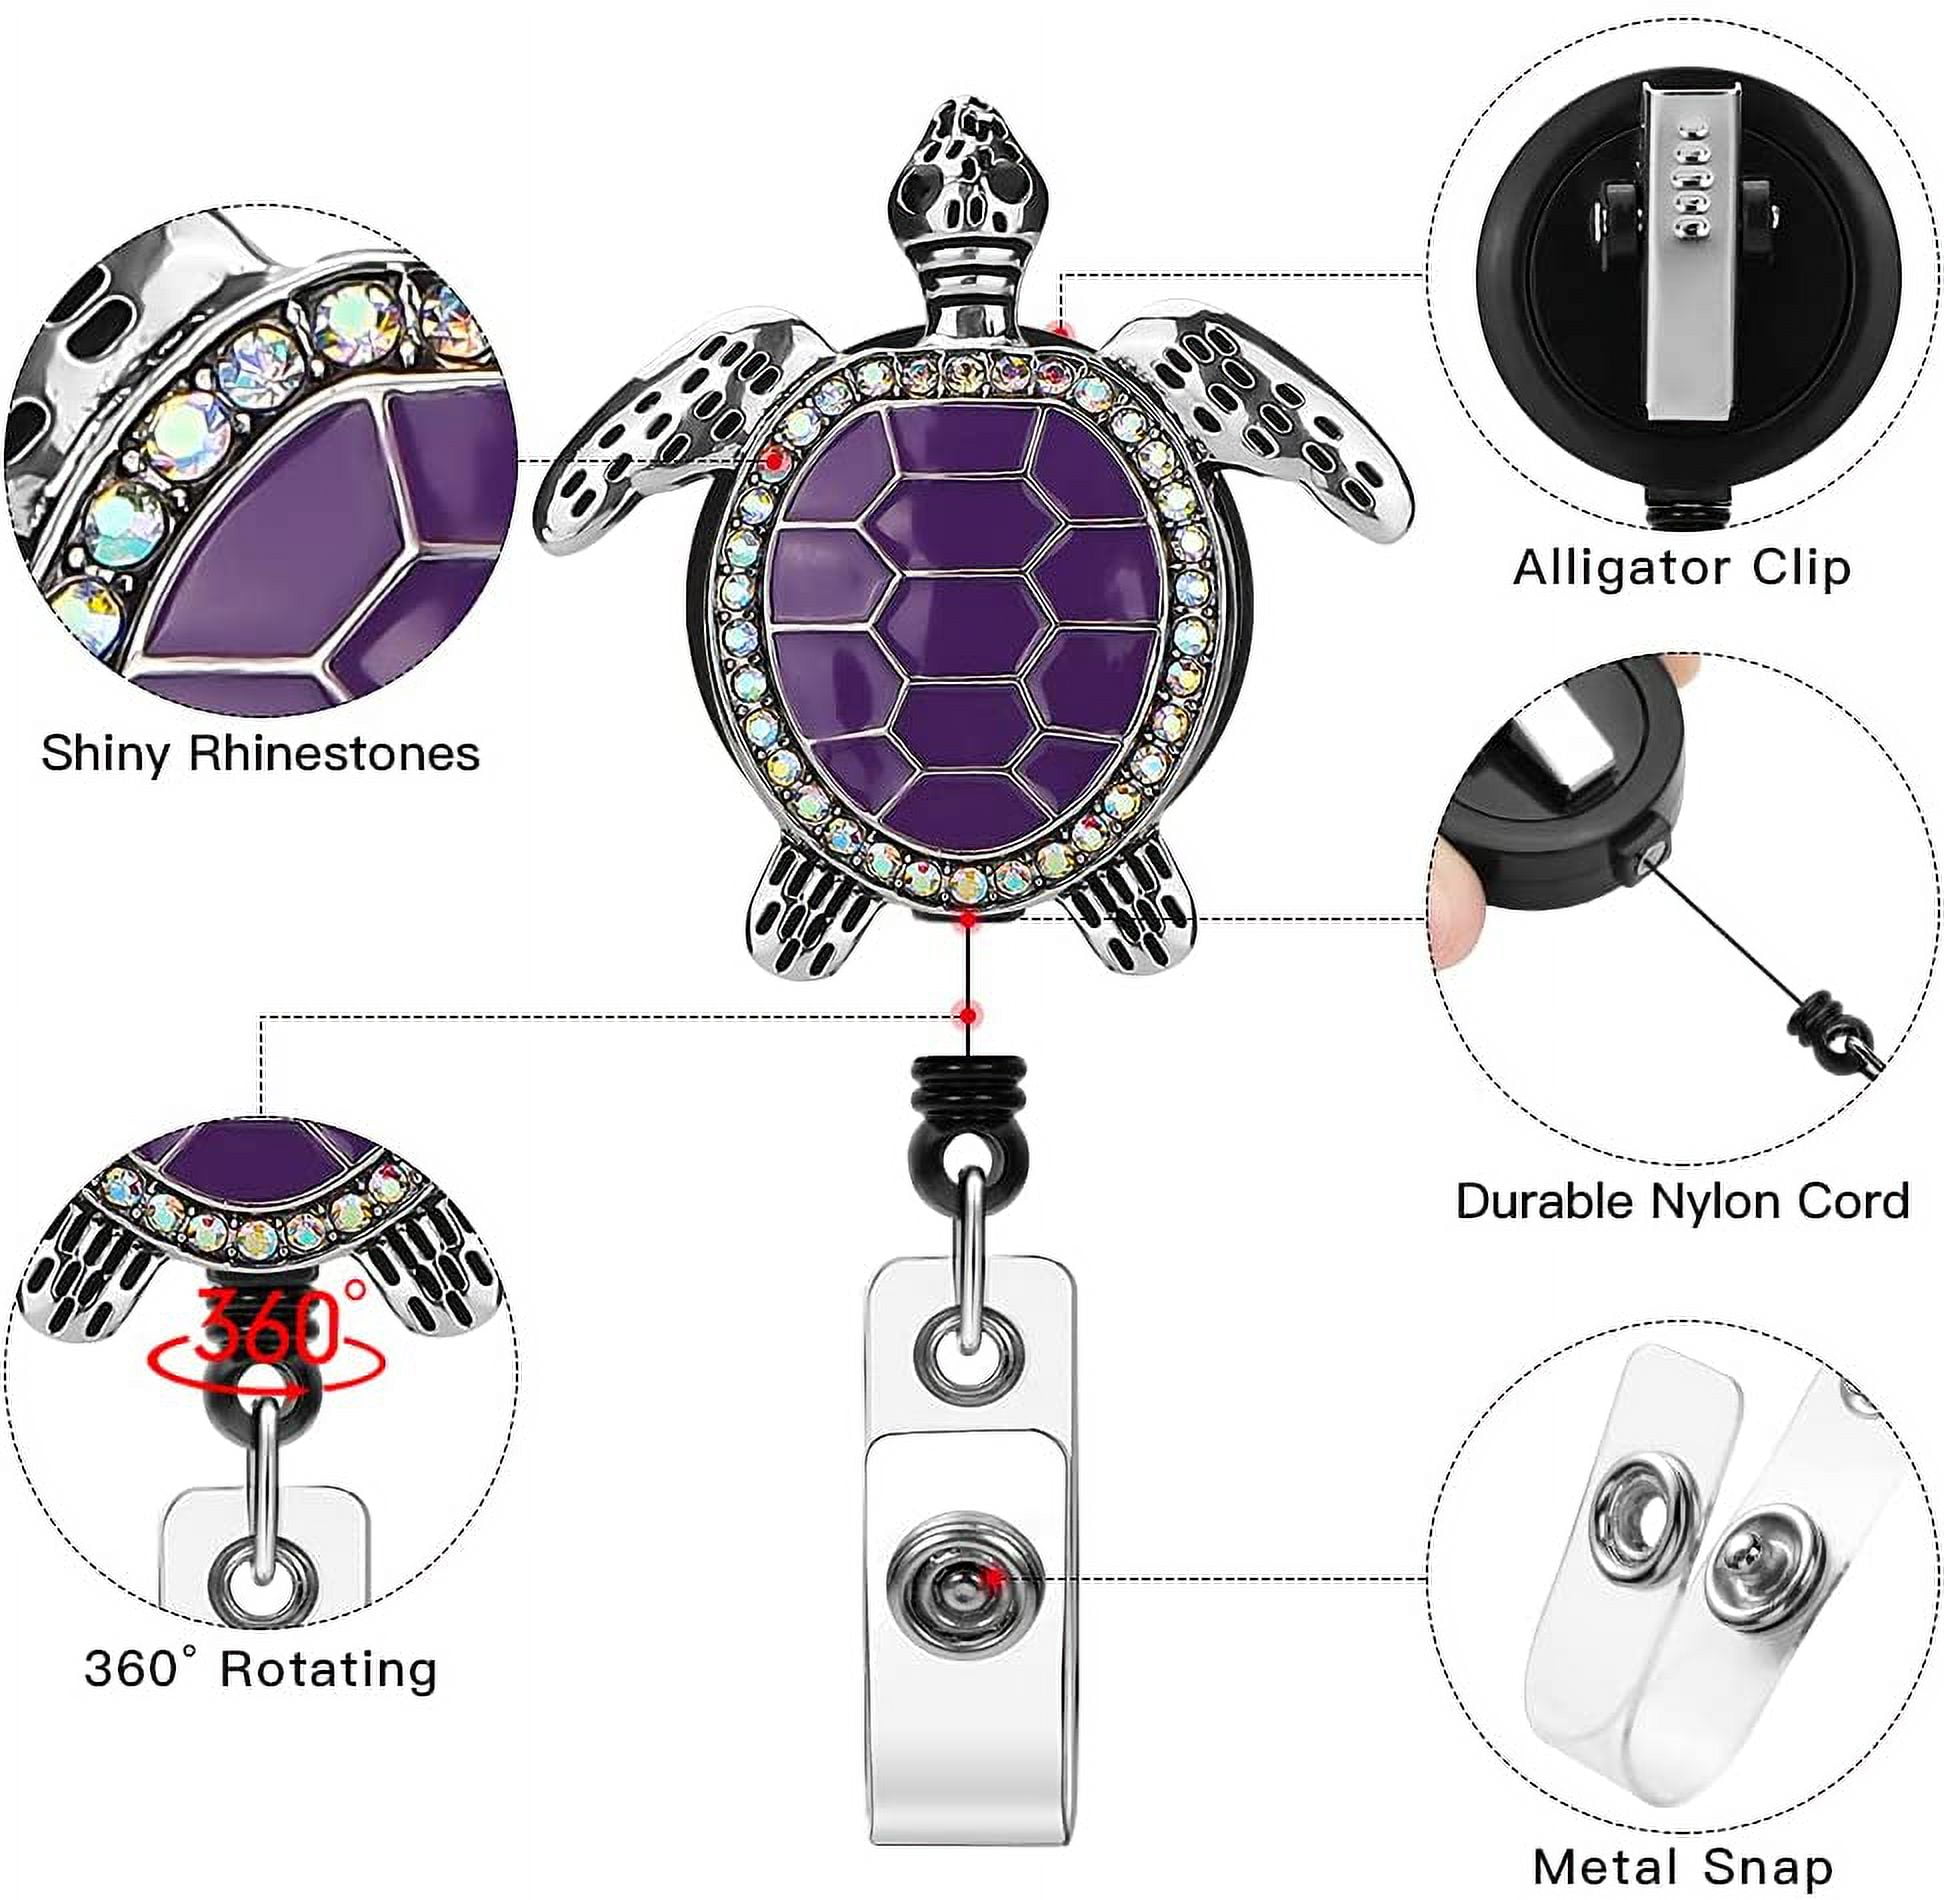 Unicorn Glitter Powder Felt & ABS Plastic Badge Reel, Retractable Badge Holder, with Iron Alligator Clip, Platinum, Dark Orchid